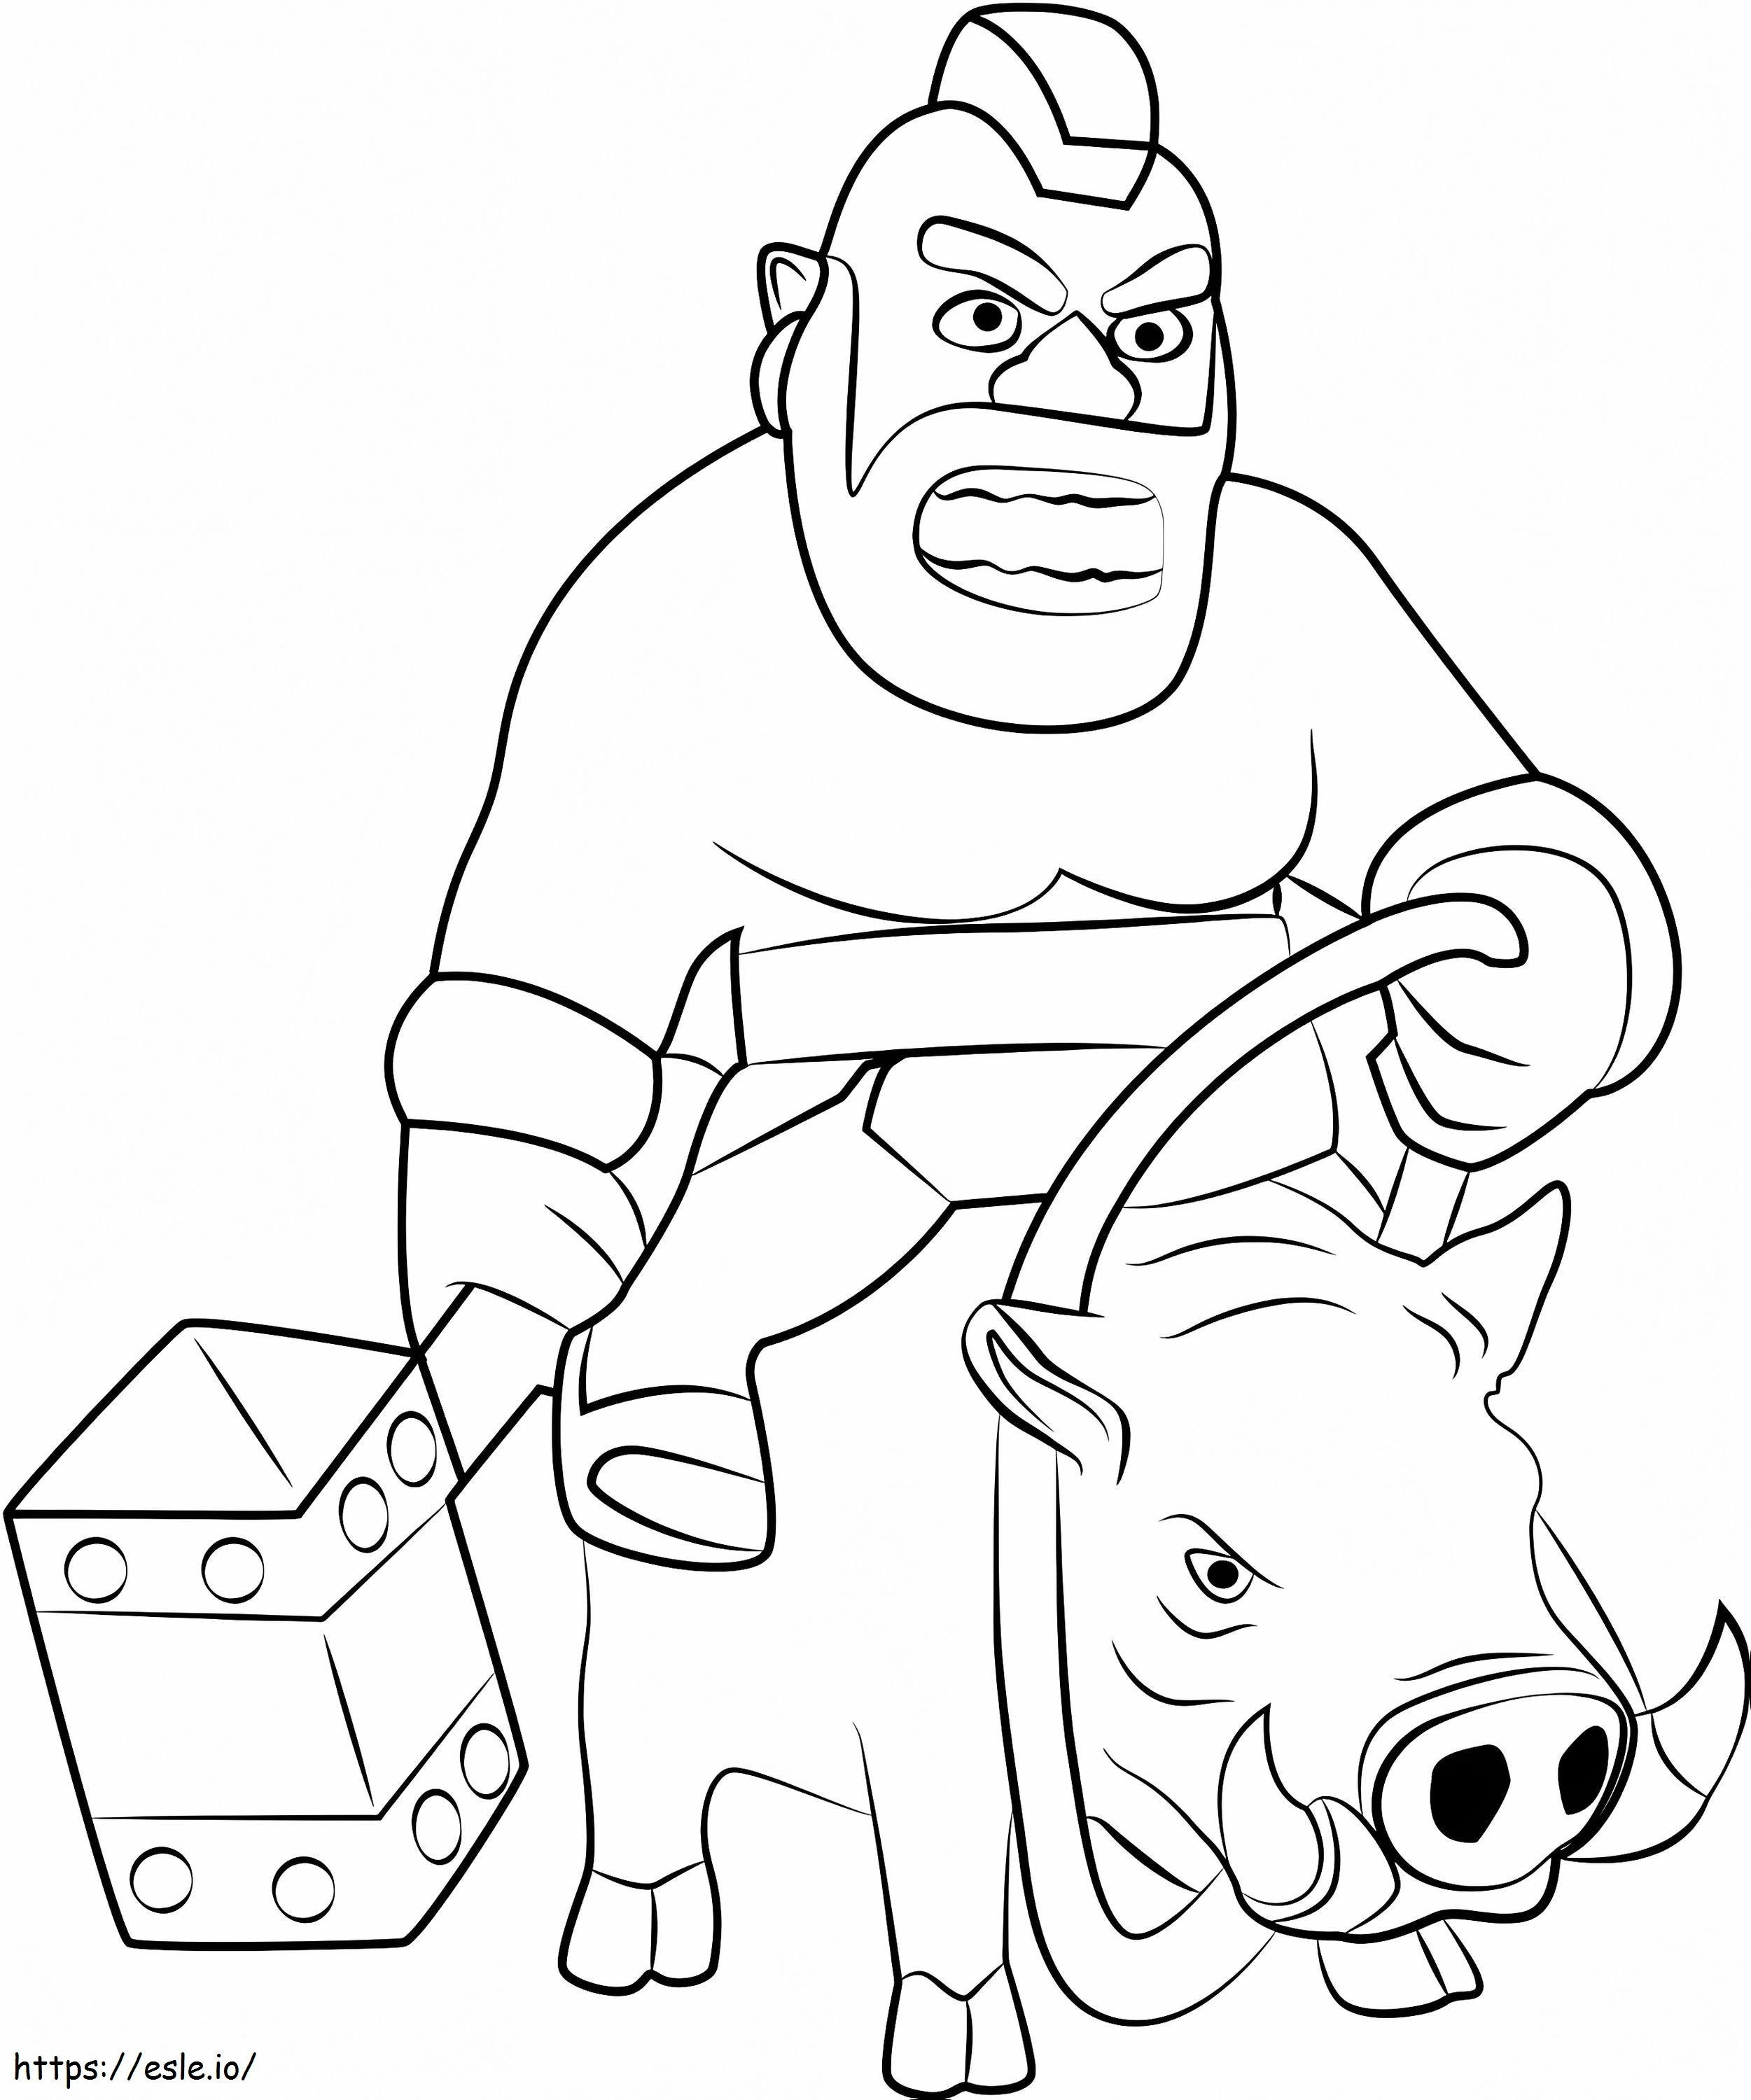 Hog Rider Riding Boar A4 coloring page